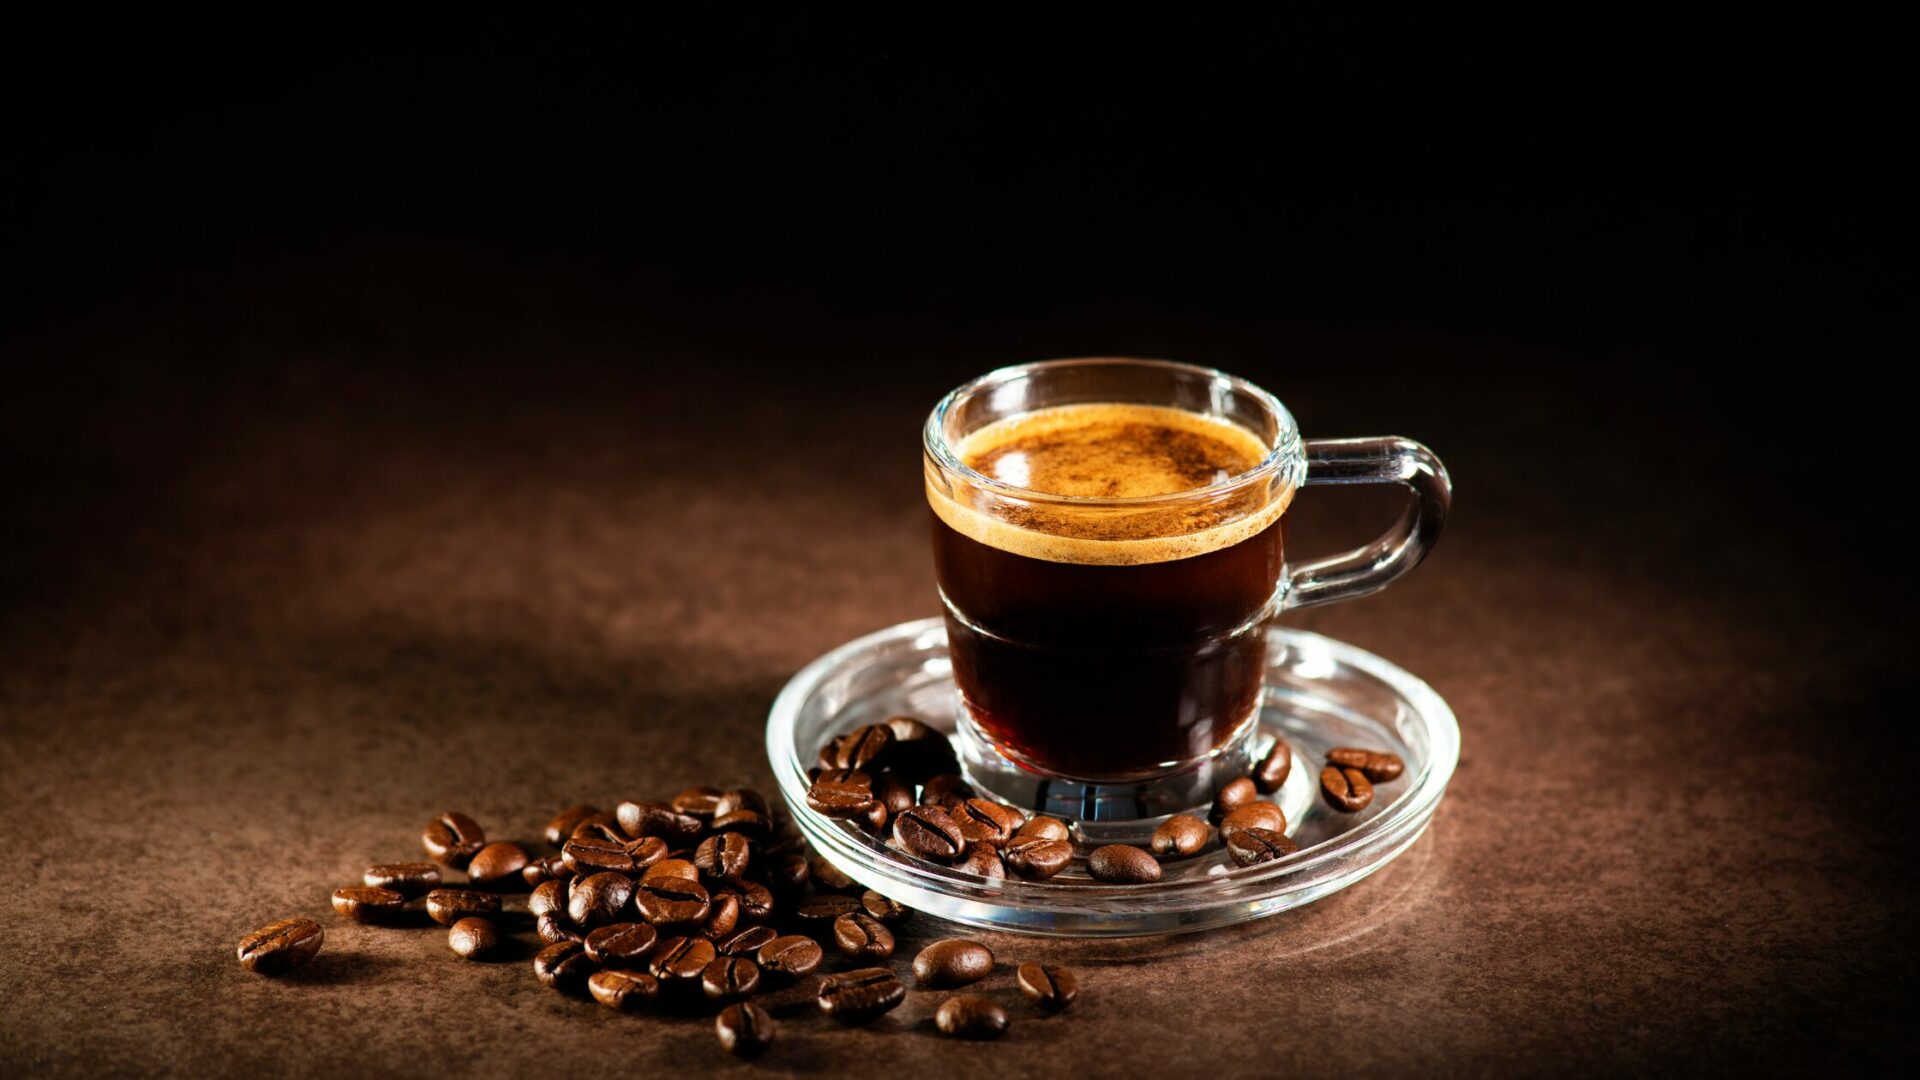 le migliori macchine per caffè con cappuccinatore, macchina da caffè, tazzina di caffè espresso